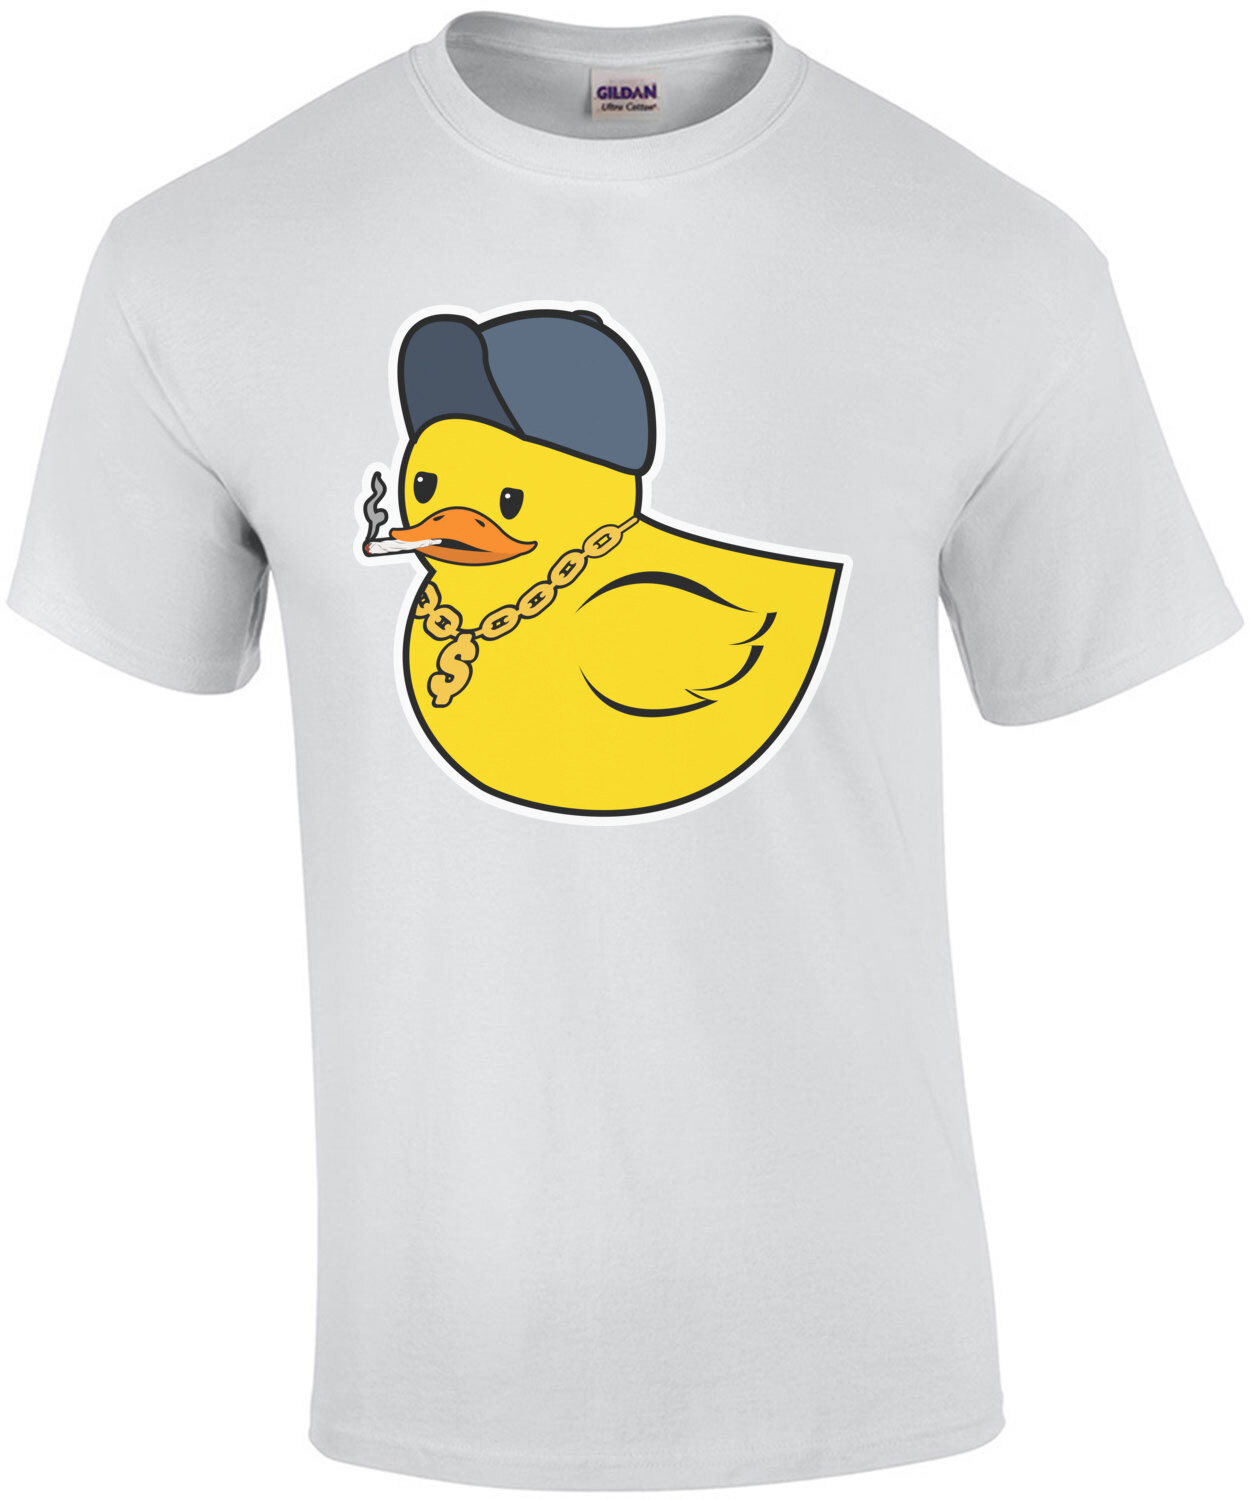 Stoner Rubber Ducky - Marijuana Weed T-Shirt